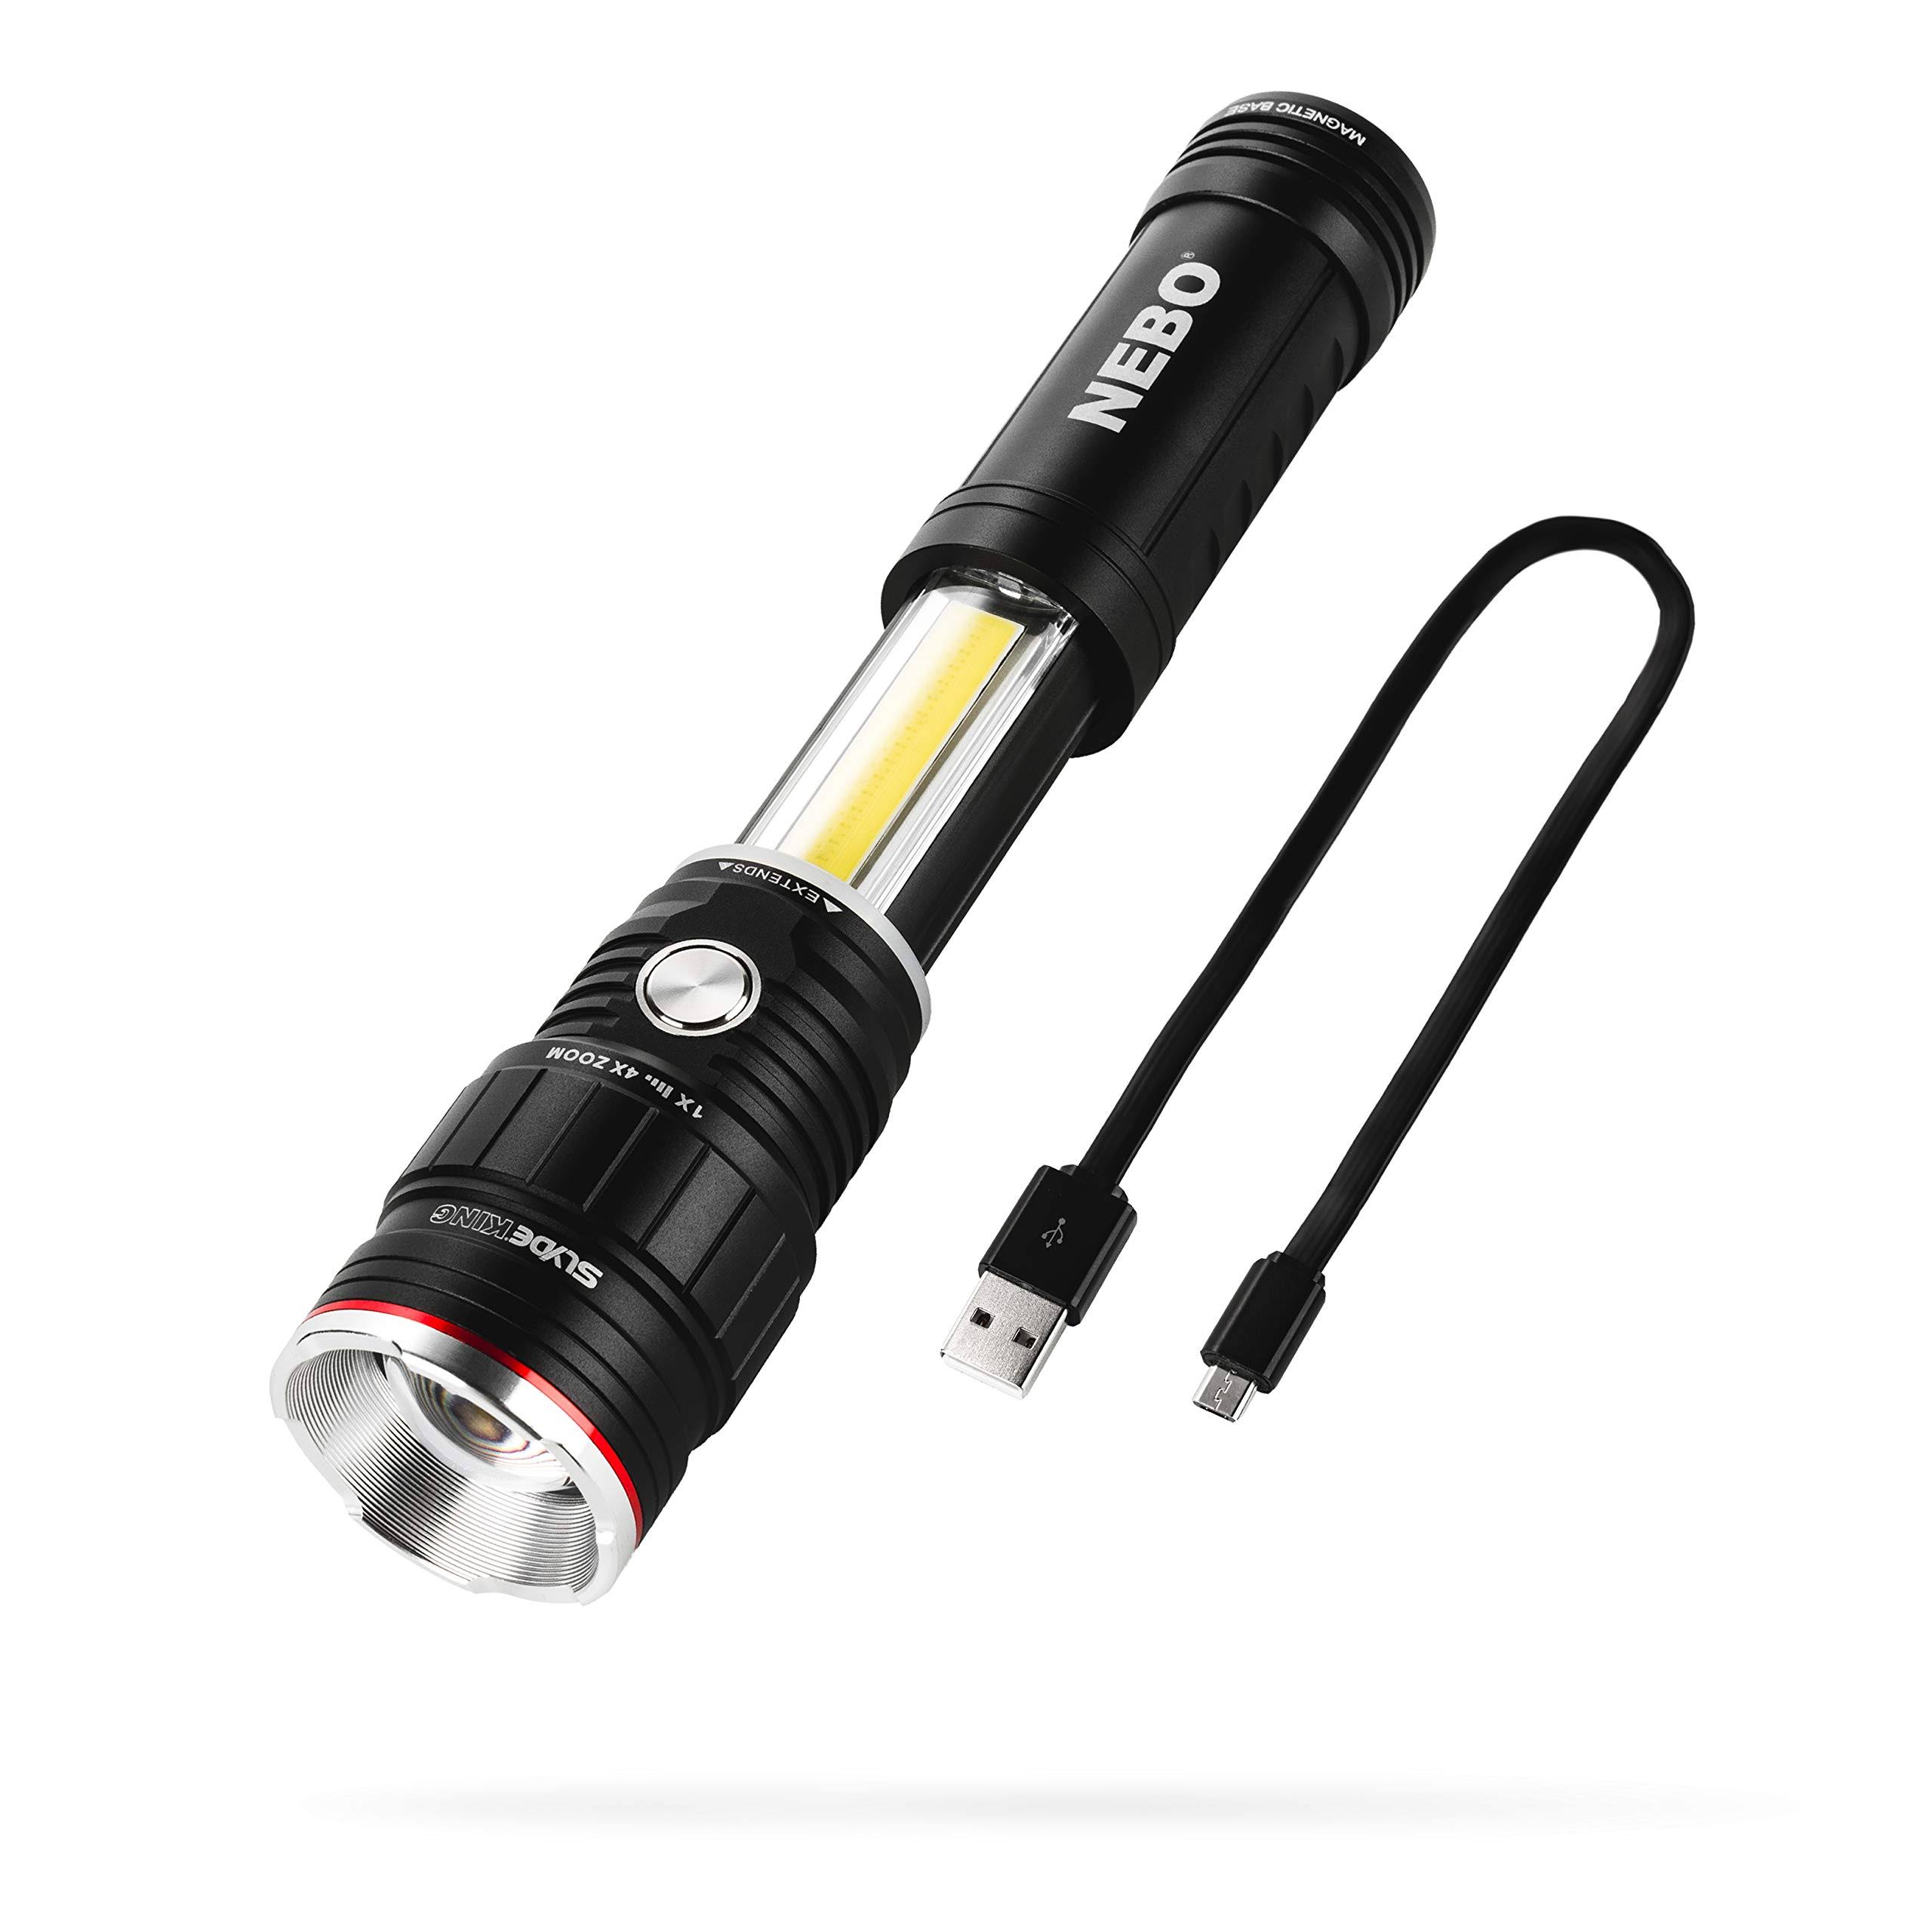 Nebo Slyde+ 500 Lumen Rechargeable Flashlight Work-Light: White and Red Light Mode and Red Flashing Light Mode, 4x Adjustable Zoom with Magnetic Base